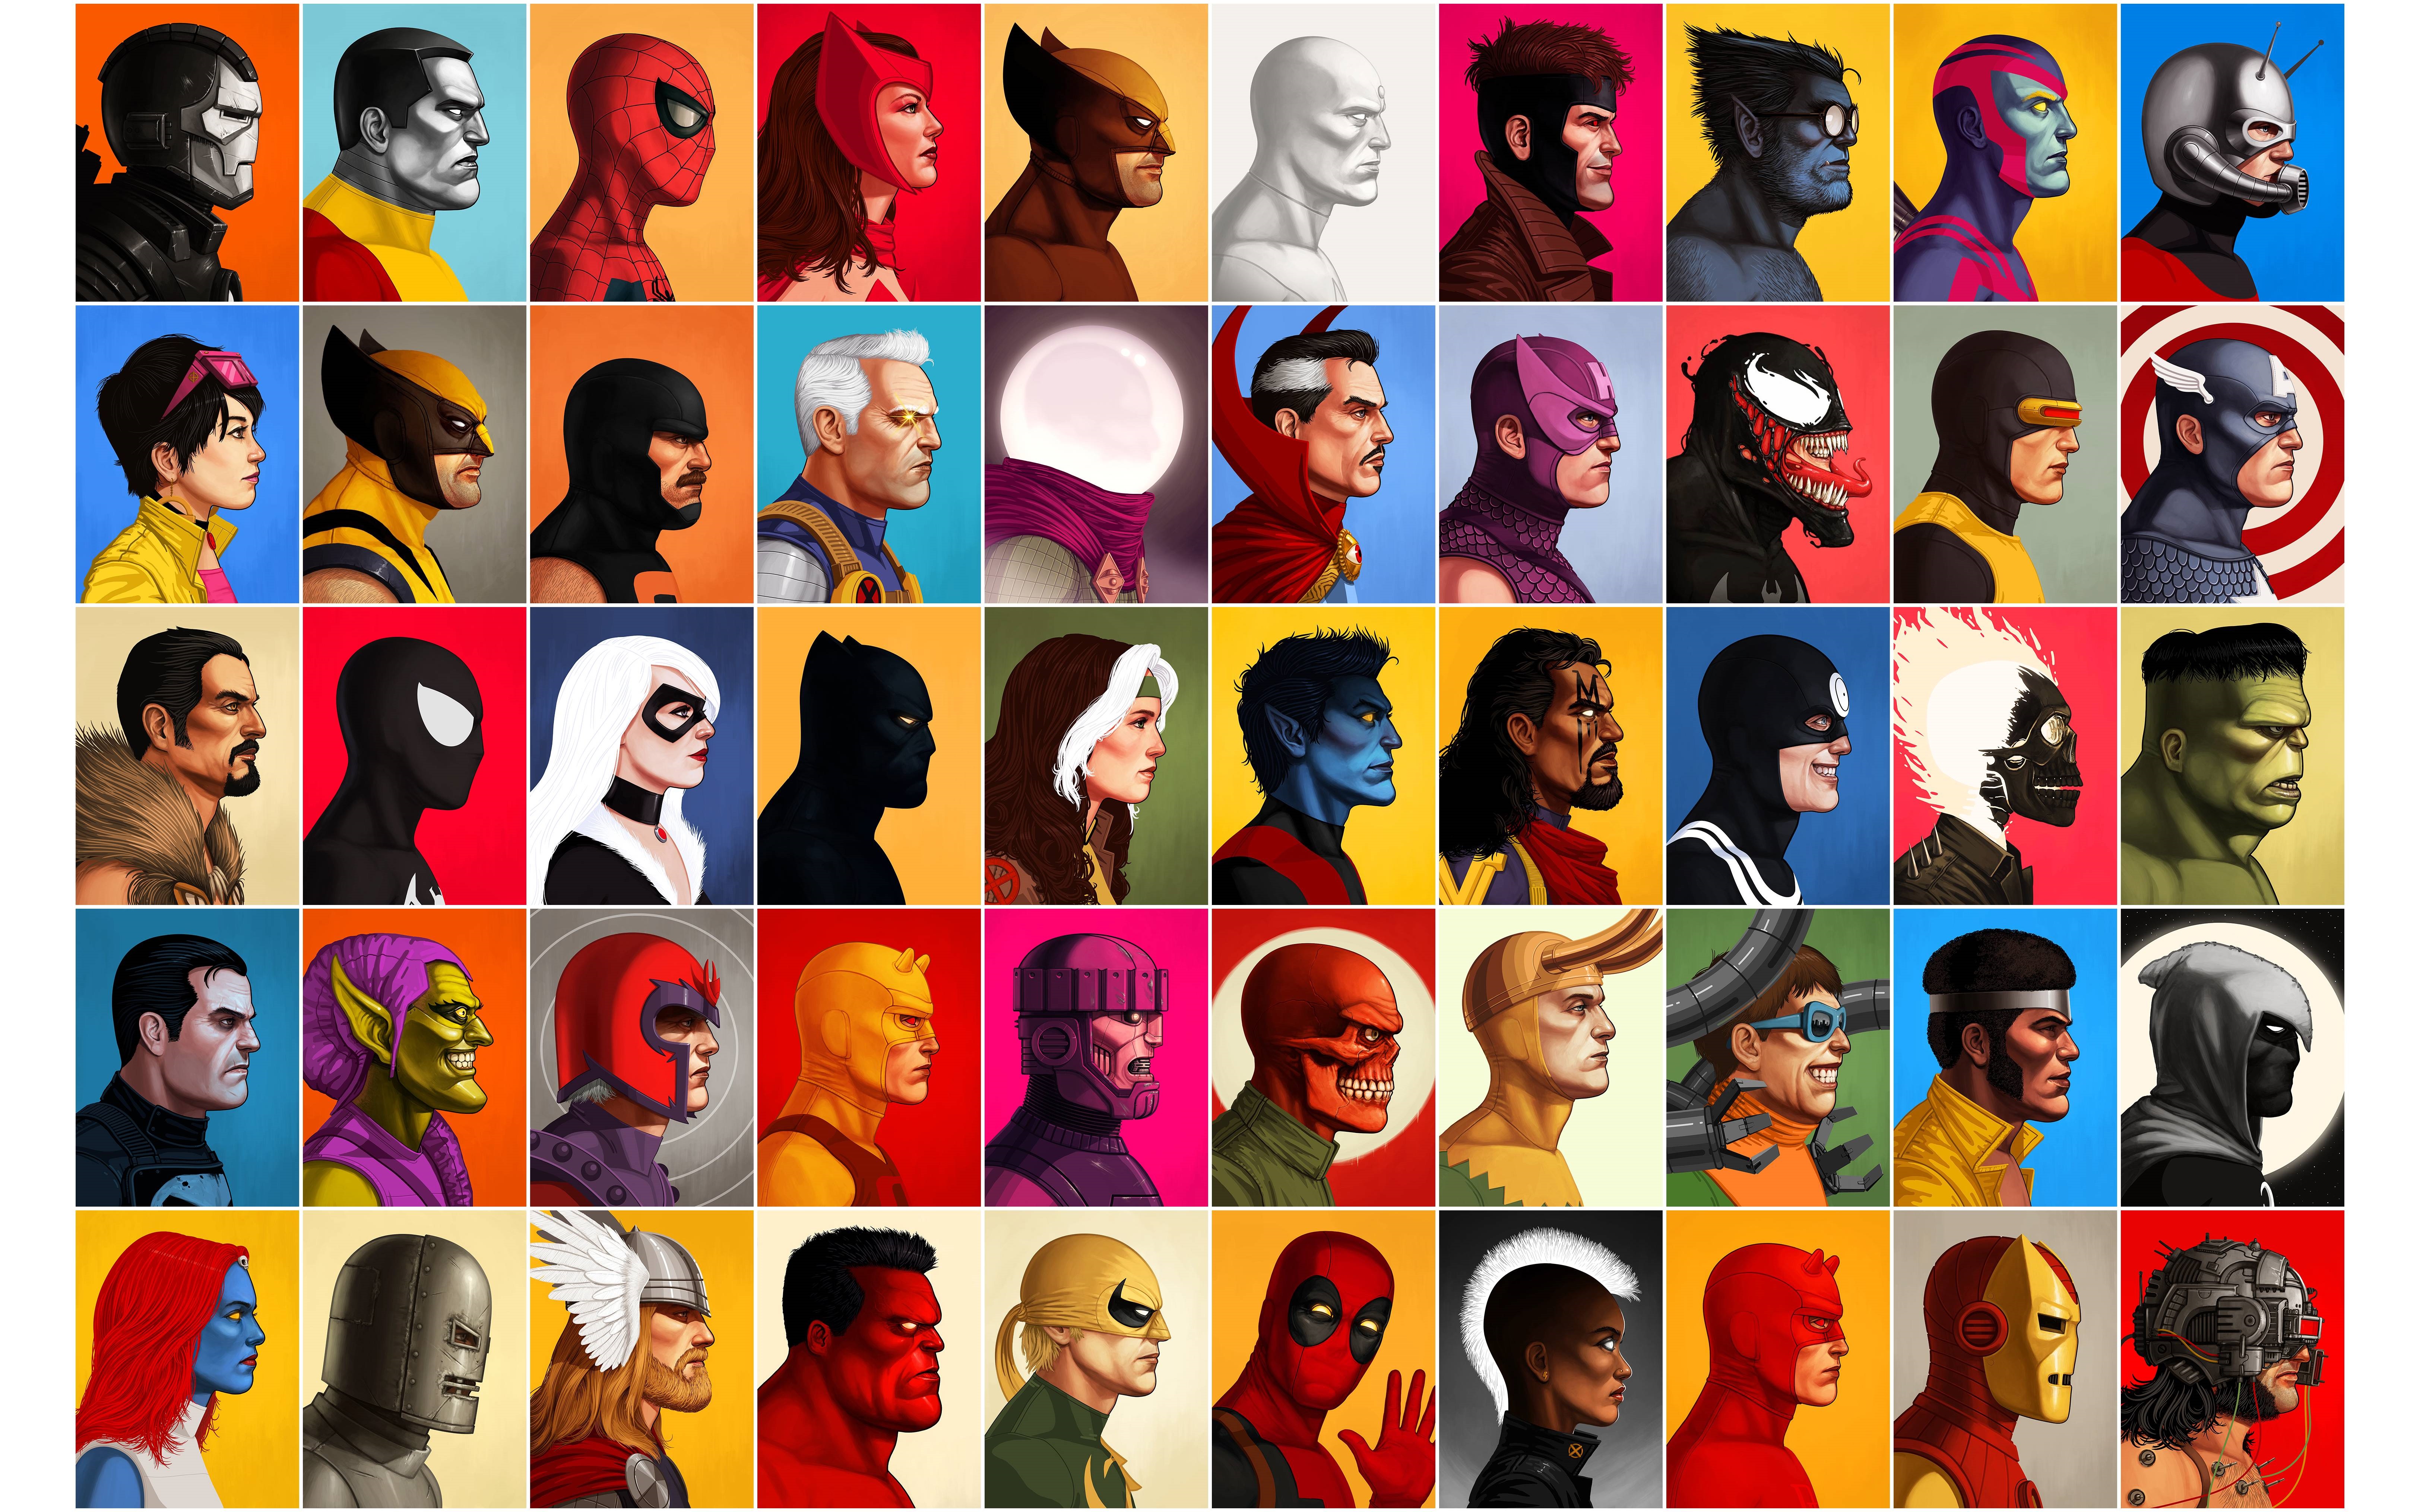 deadpool, daredevil, spider man, hulk, bullseye (marvel comics), cable (marvel comics), puck (marvel comics), wolverine, collage, archangel (marvel comics), loki (marvel comics), scarlet witch, black panther (marvel comics), comics, ant man, beast (marvel comics), black cat (marvel comics), captain america, clint barton, colossus, cyclops (marvel comics), doctor octopus, doctor strange, galactus, gambit (marvel comics), green goblin, hawkeye, iron fist (marvel comics), iron man, jubilee (marvel comics), magneto (marvel comics), moon knight, mystique (marvel comics), nightcrawler (marvel comics), punisher, red hulk, red skull (marvel comics), rogue (marvel comics), silver surfer, storm (marvel comics), thor, venom, war machine, weapon x (marvel comics) phone wallpaper